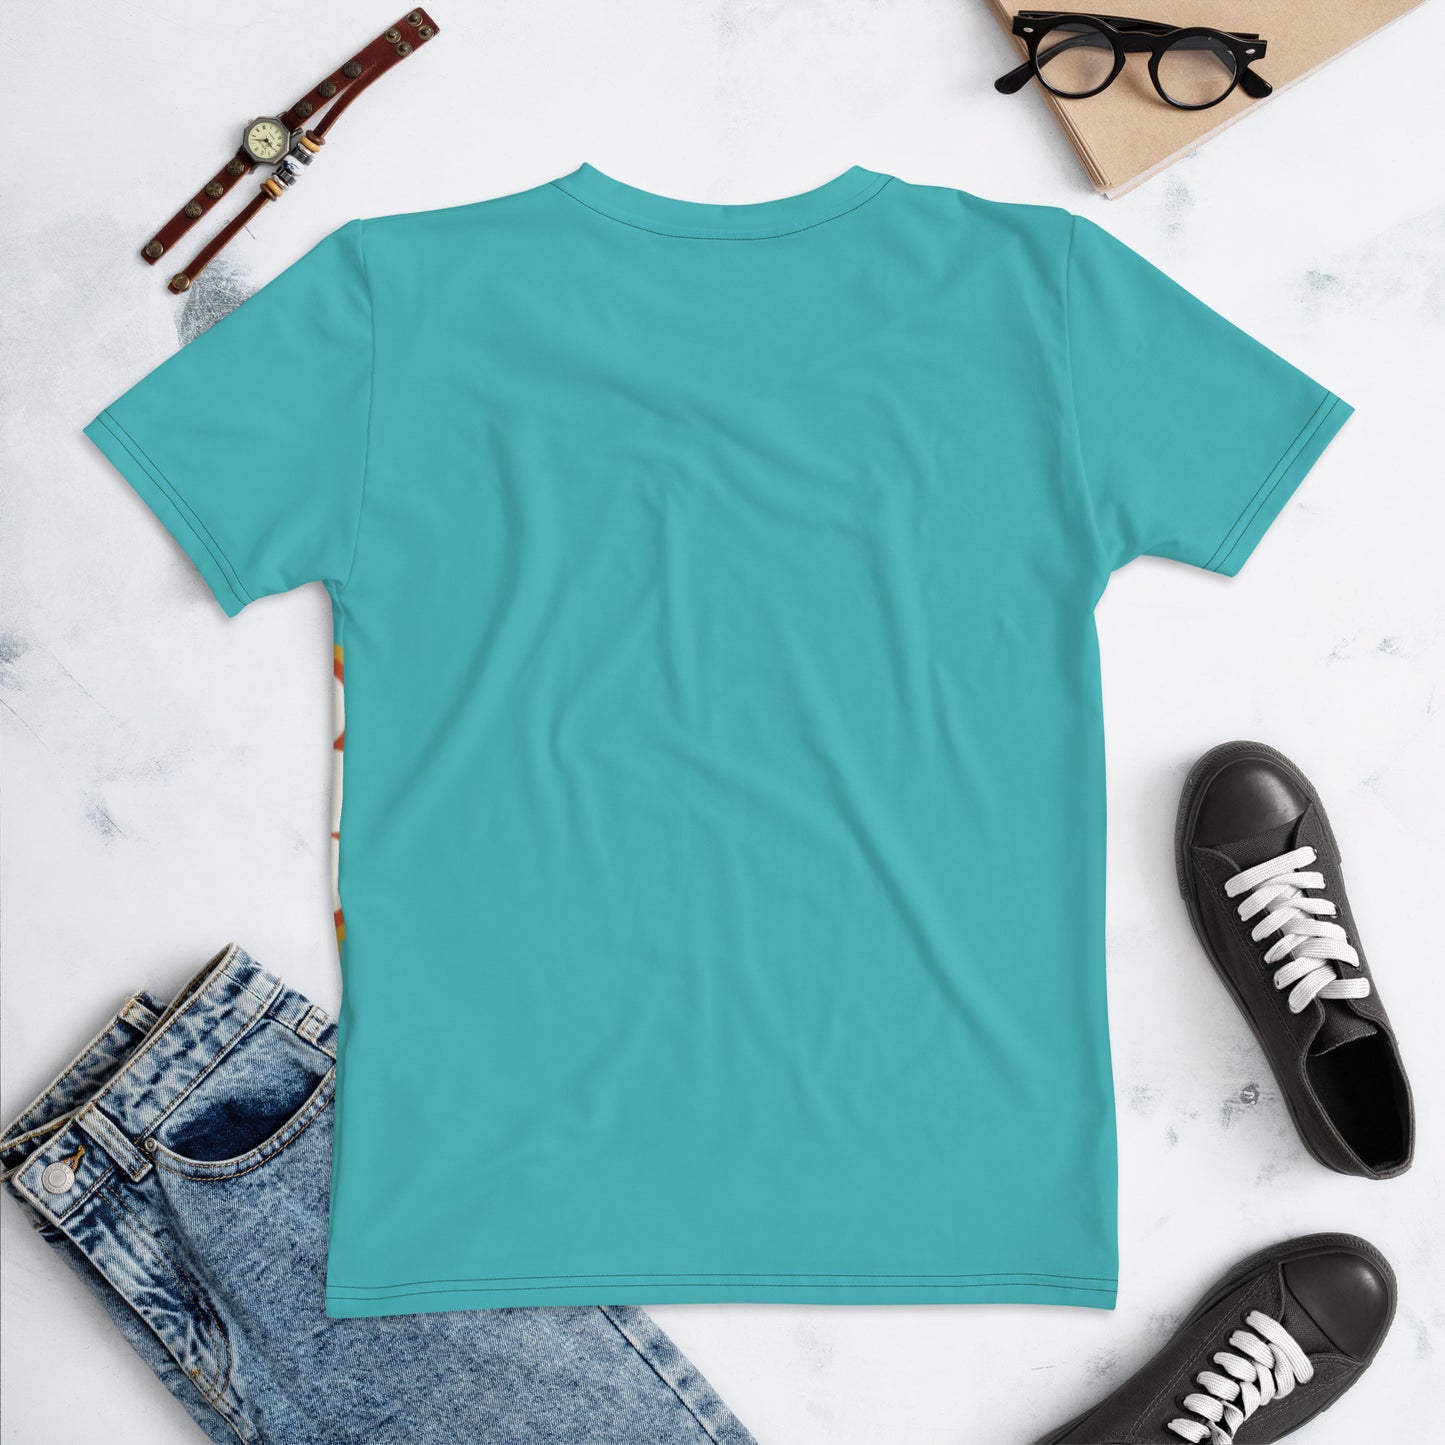 Sagittarius [Women's T-shirt]